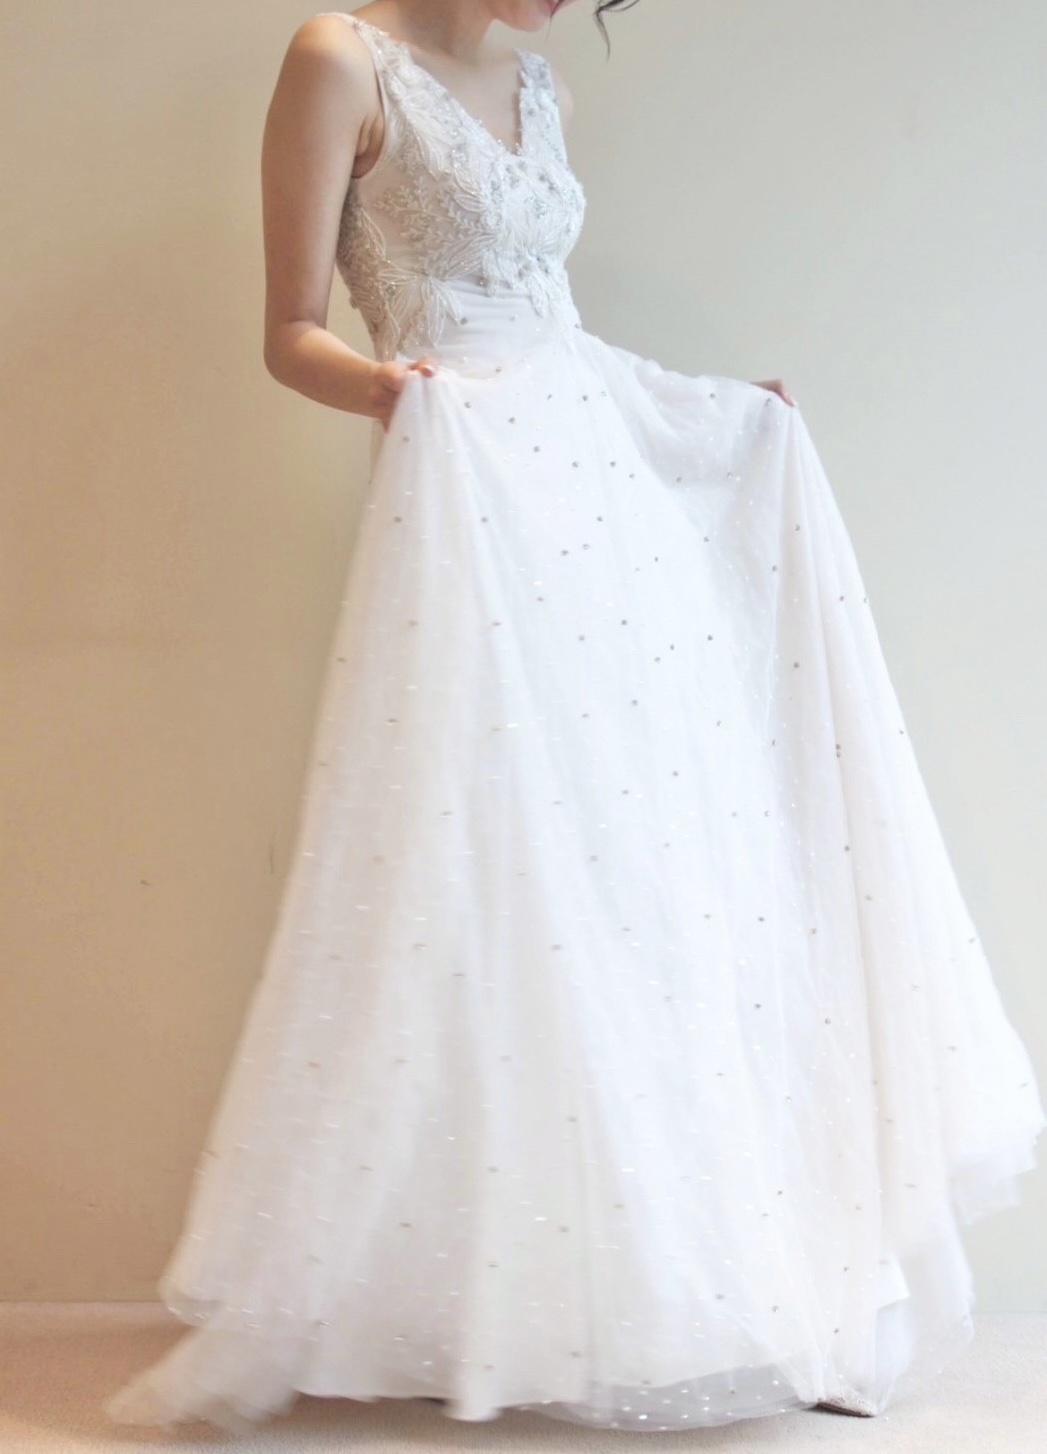 THE TREAT DRESSING京都店にてお取り扱いをしているLIZ MARTINEZは日本初上陸のブランドで他の花嫁とはかぶらないウェディングドレス